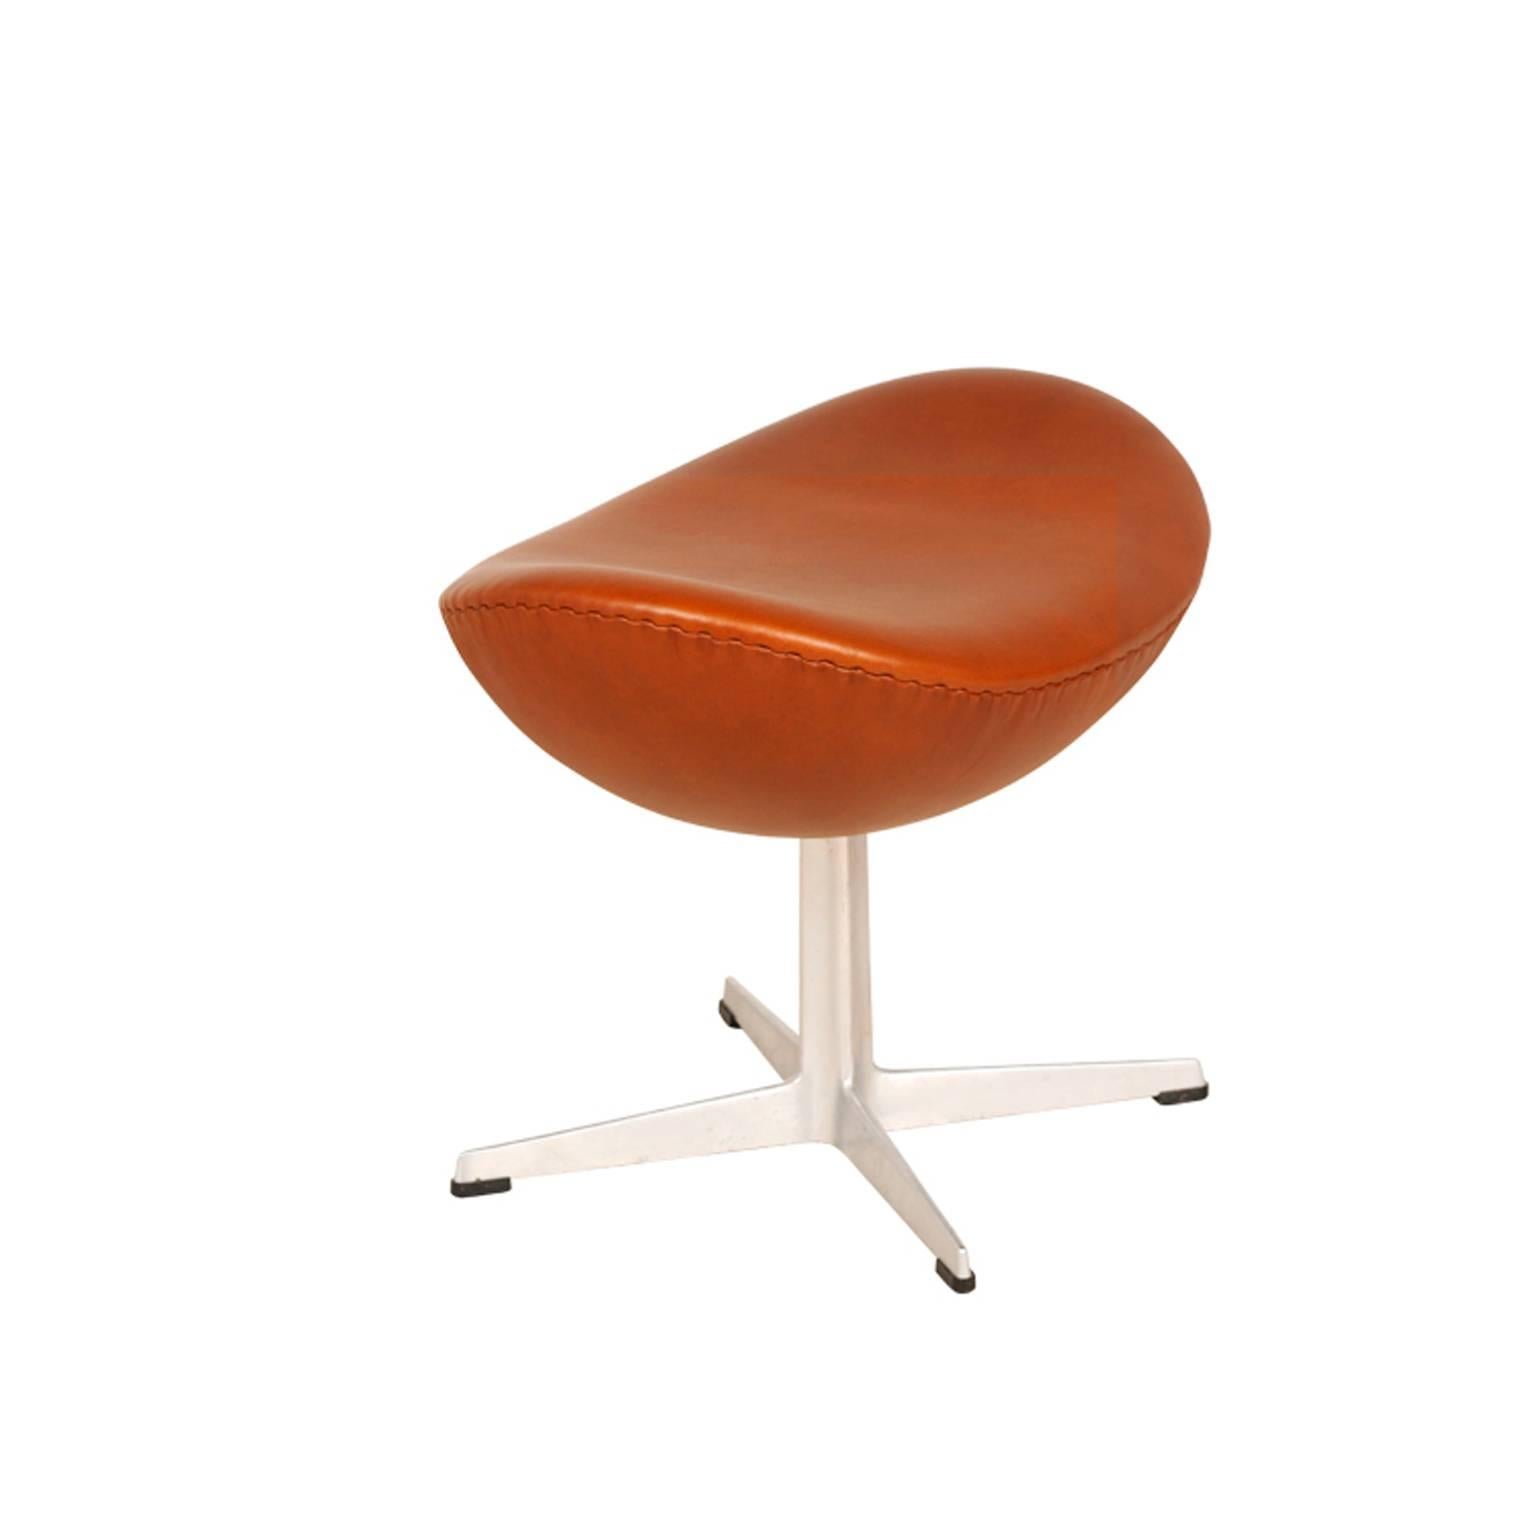 Mid-20th Century Arne Jacobsen “Egg” Chair with Ottoman for Fritz Hansen